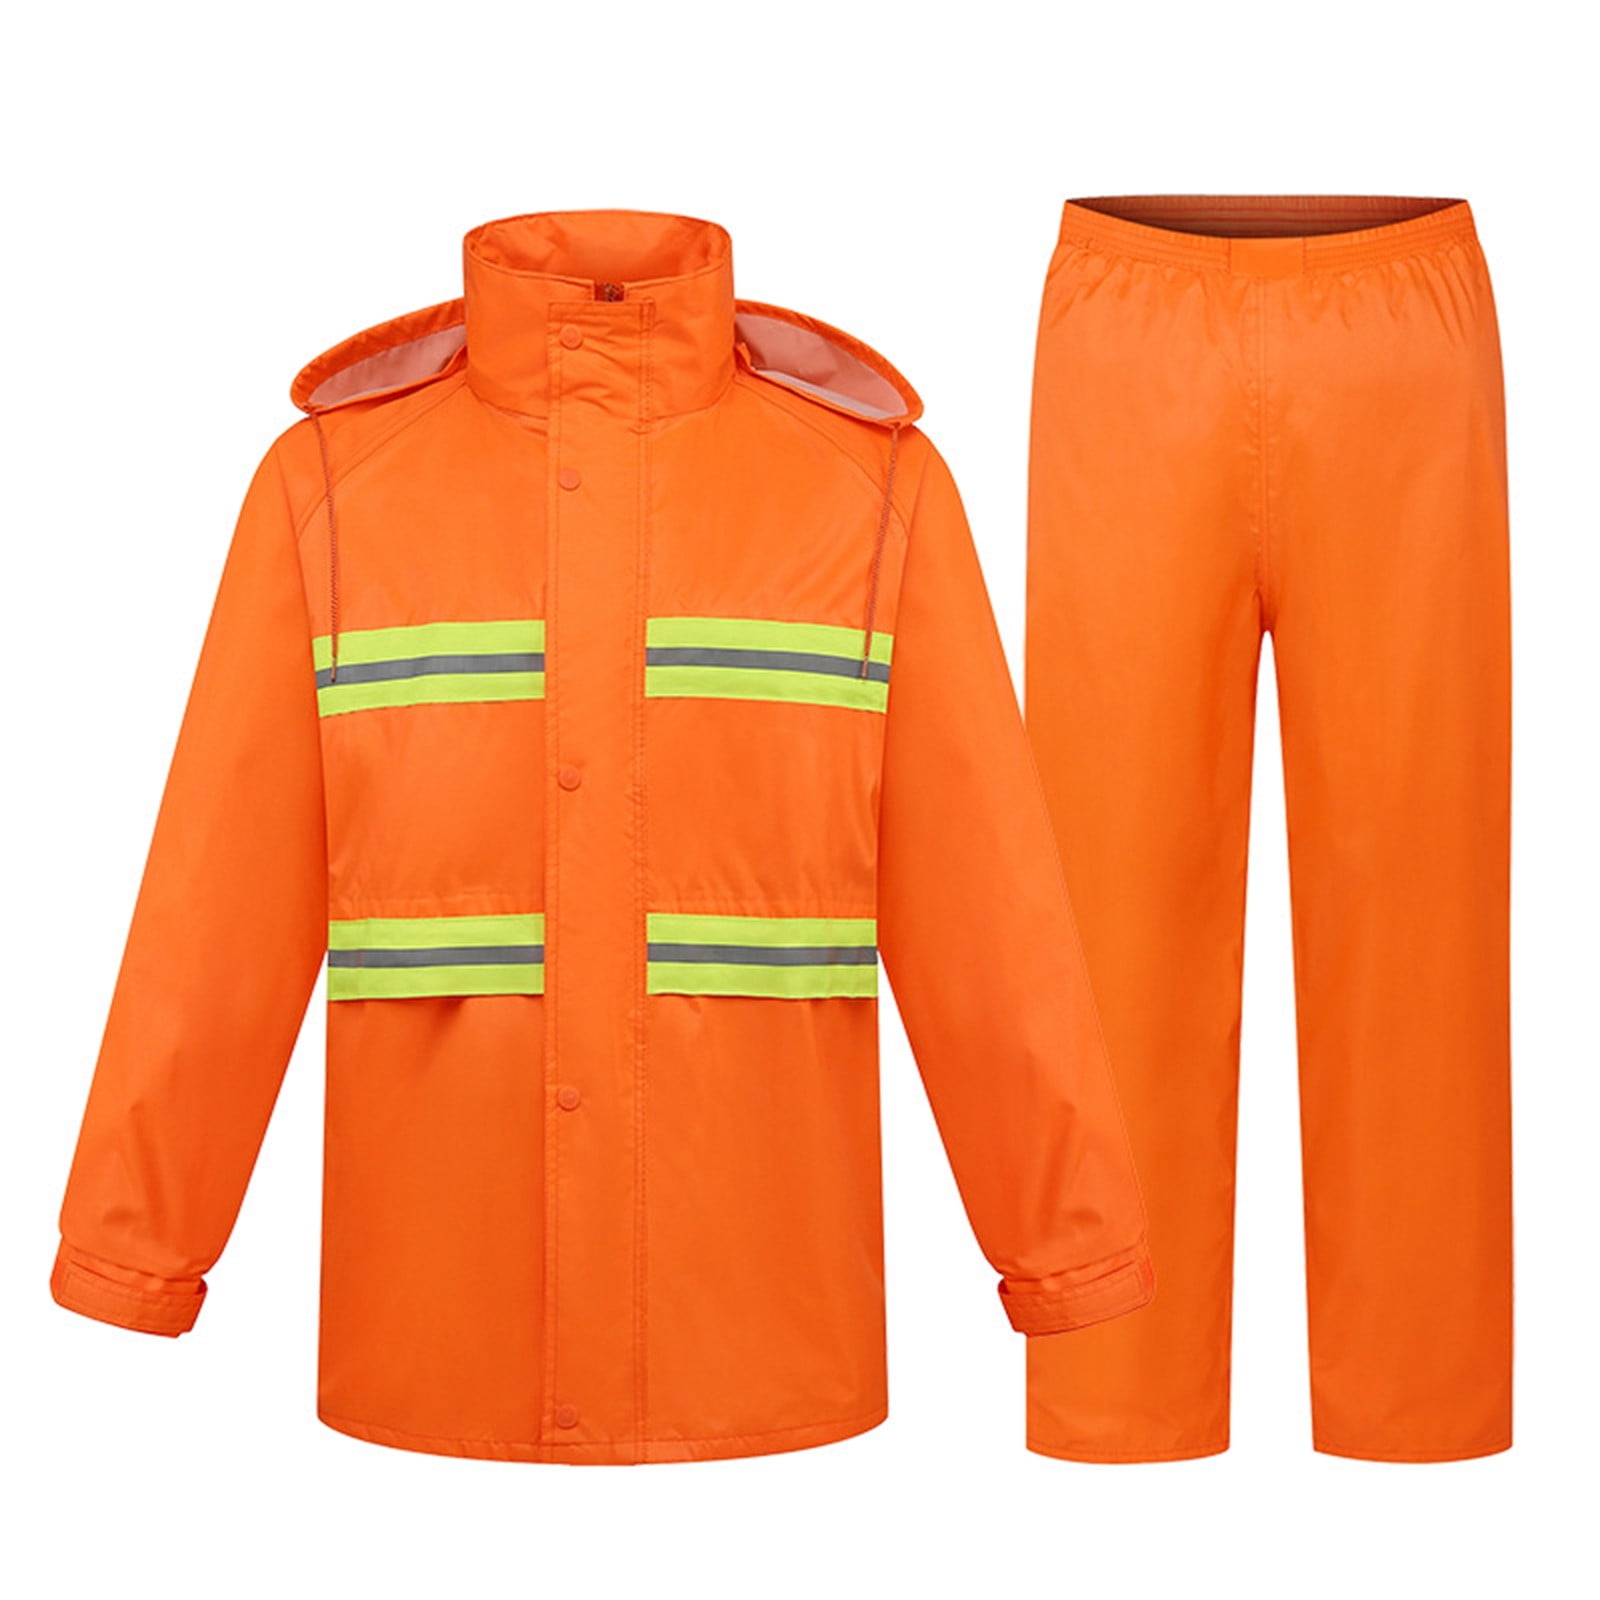 8QIDA Men's Two Tier Rain Suits Rain Jacket with Pants High Visibility ...